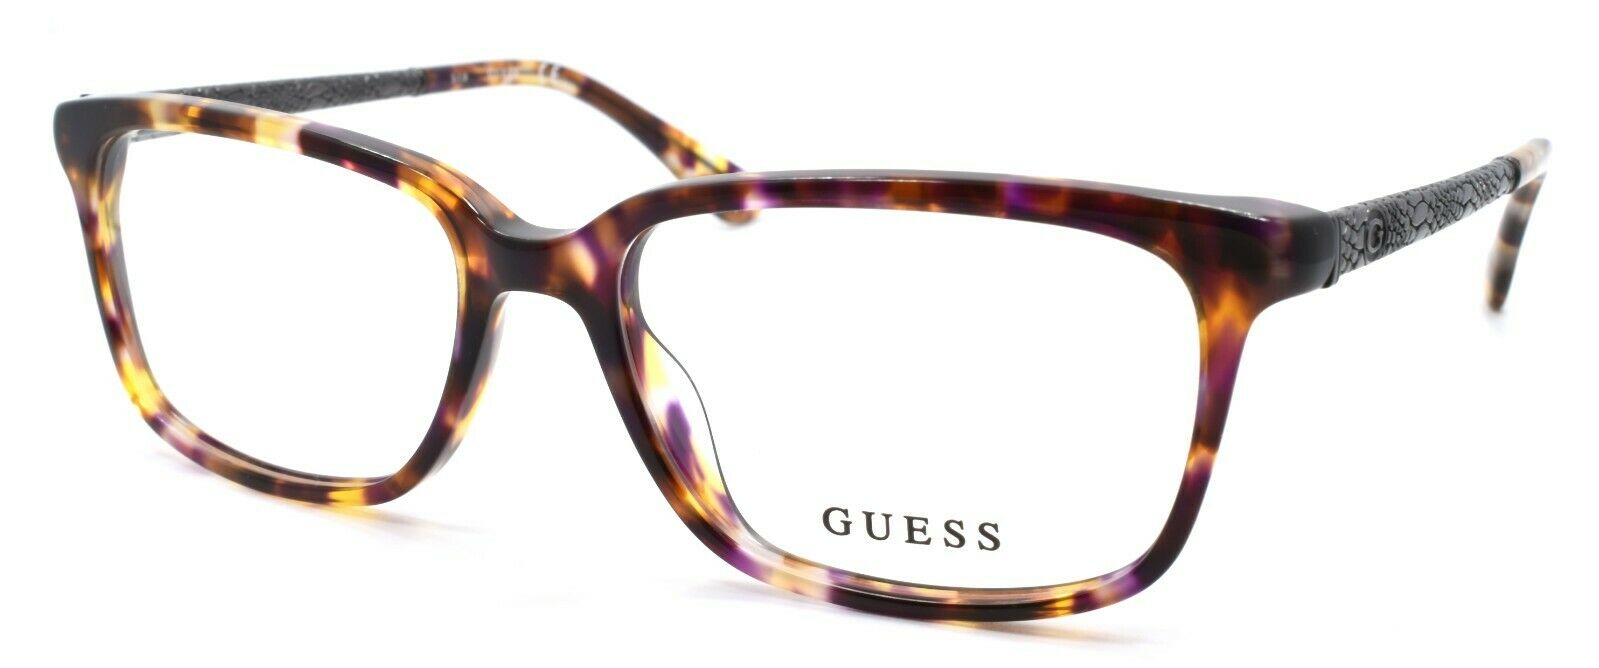 1-GUESS GU2612 055 Women's Eyeglasses Frames 53-16-135 Tortoise-664689876426-IKSpecs